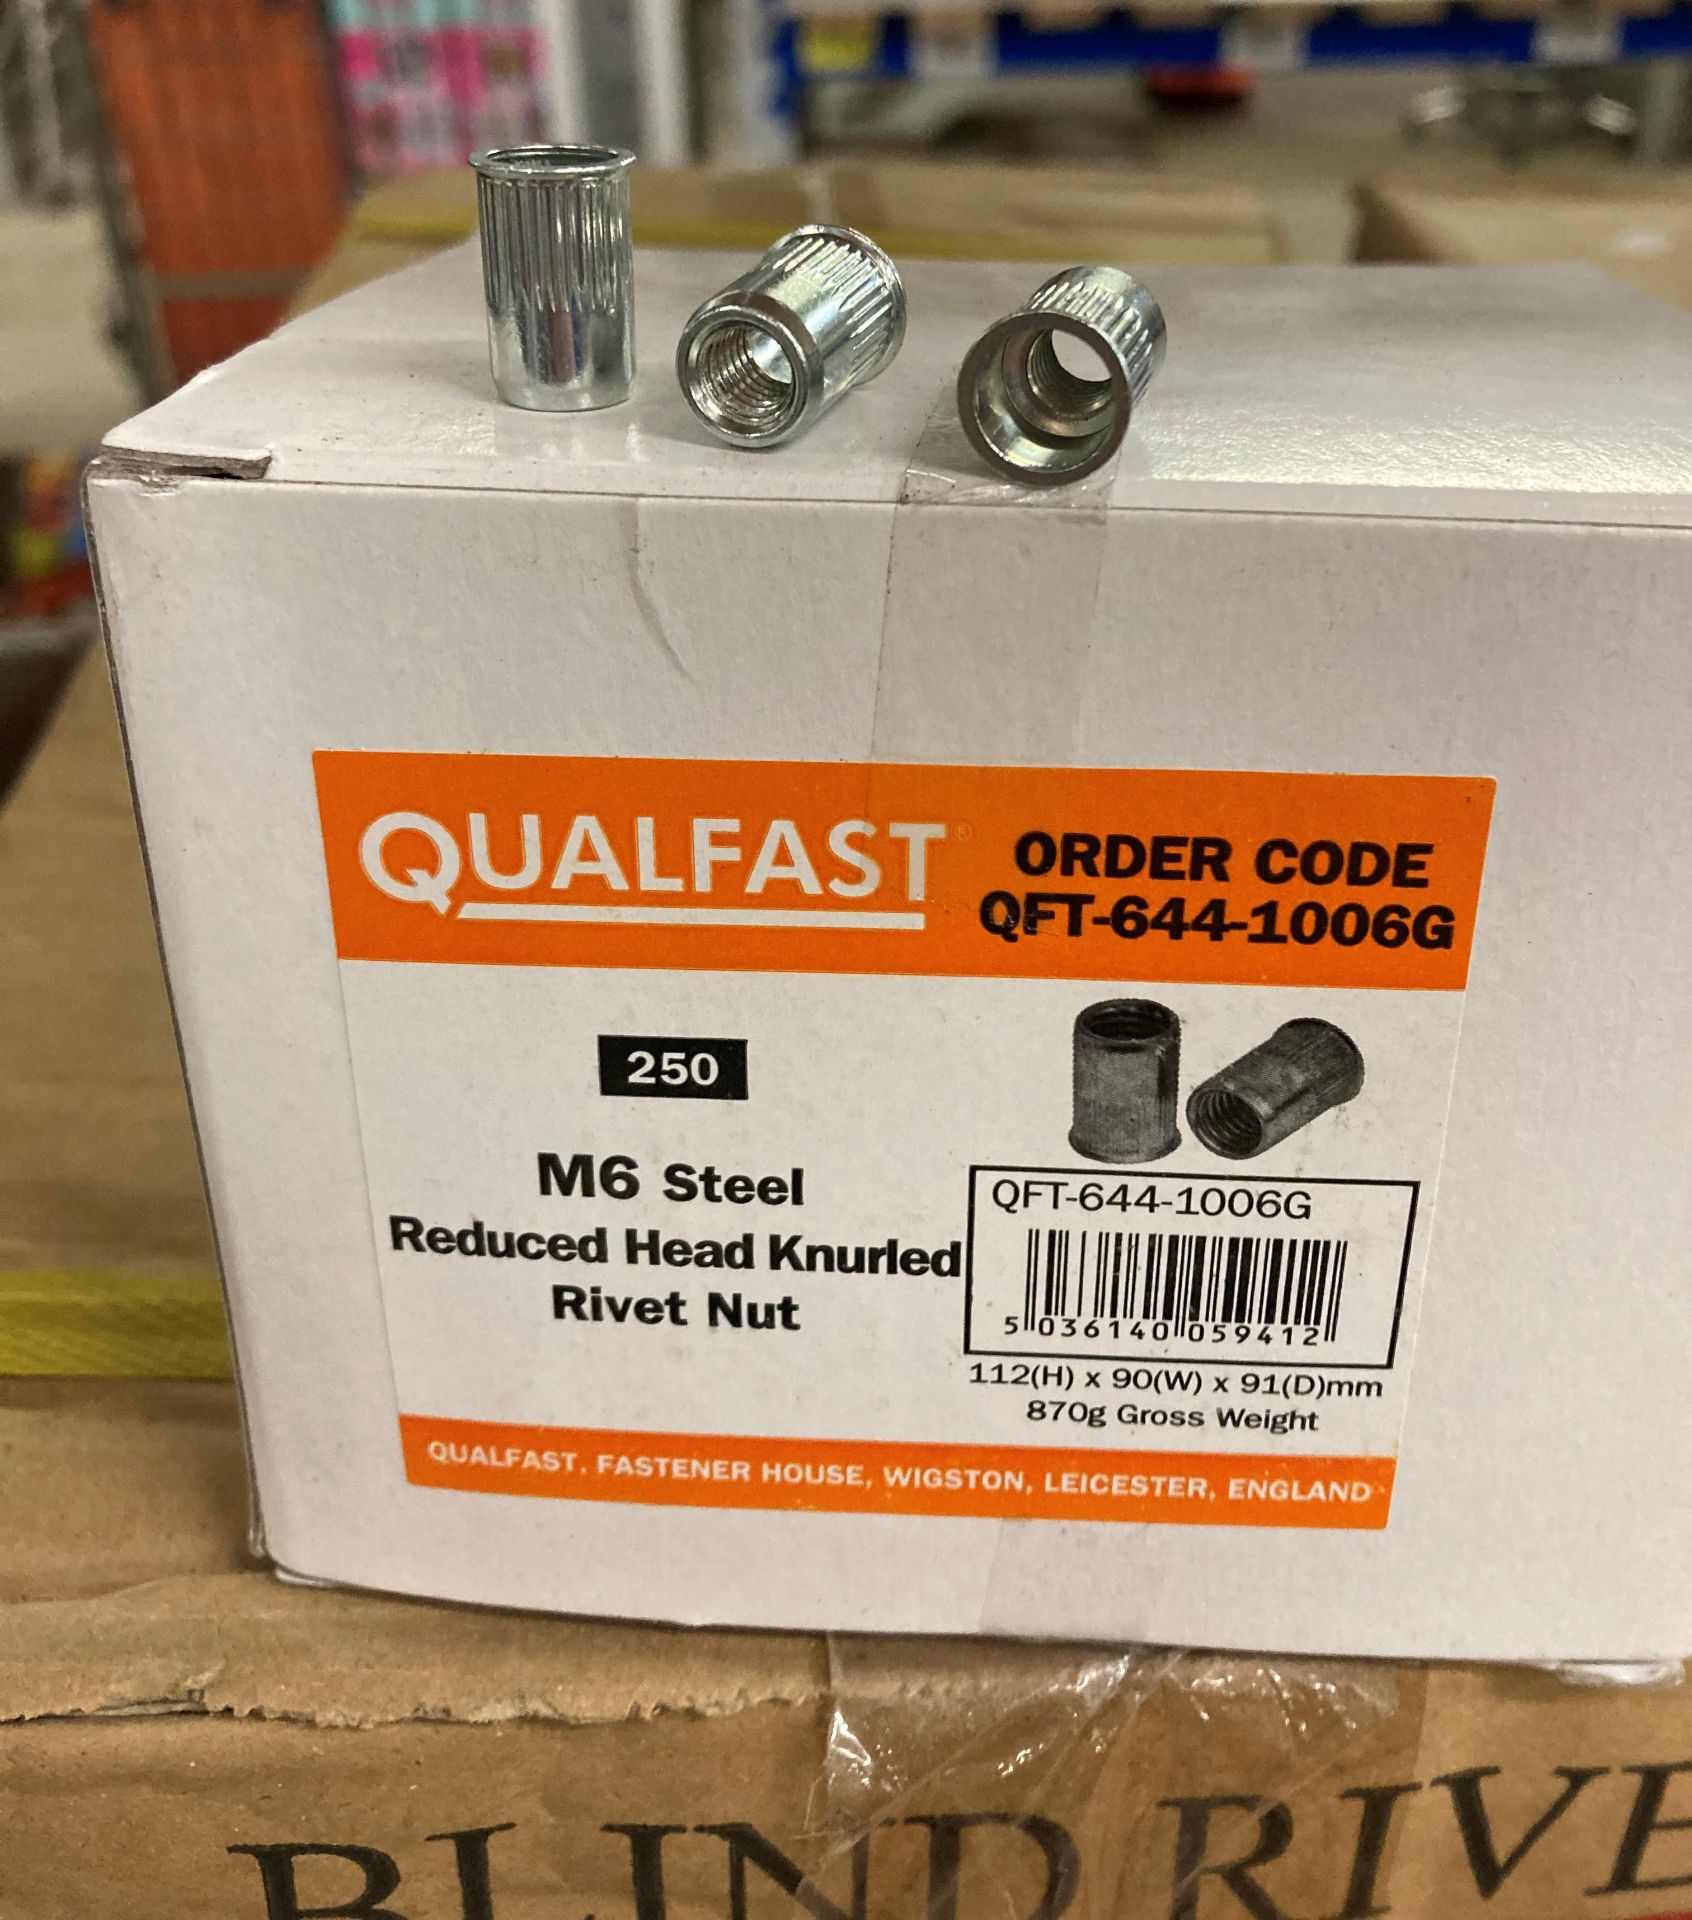 78 x boxes of 250 Qualcast M6 steel reduced head knurled rivet nuts - product code QTF-644-1006G - Bild 2 aus 2